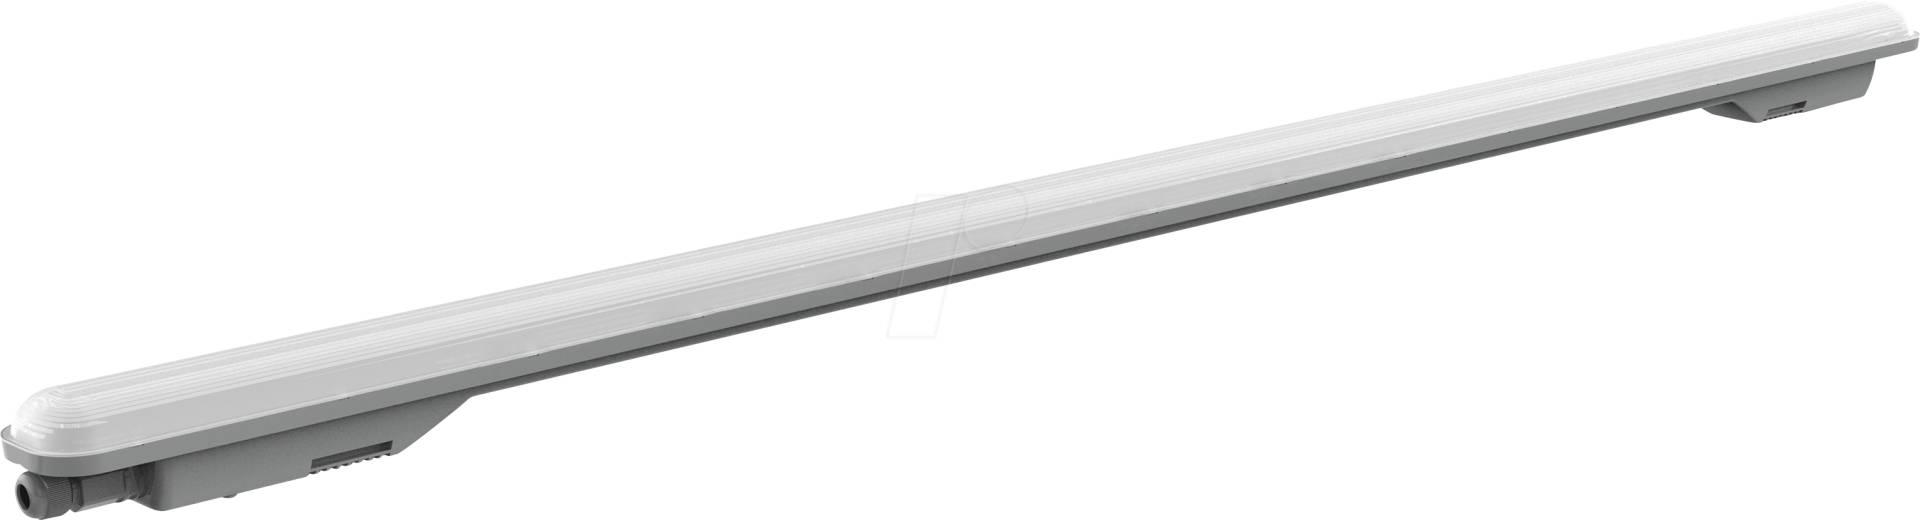 MLI 20300550 - LED-Wannenleuchte Aquaprofi Sensor 150, 47 W, 6650 lm, 150 cm von Müller Licht